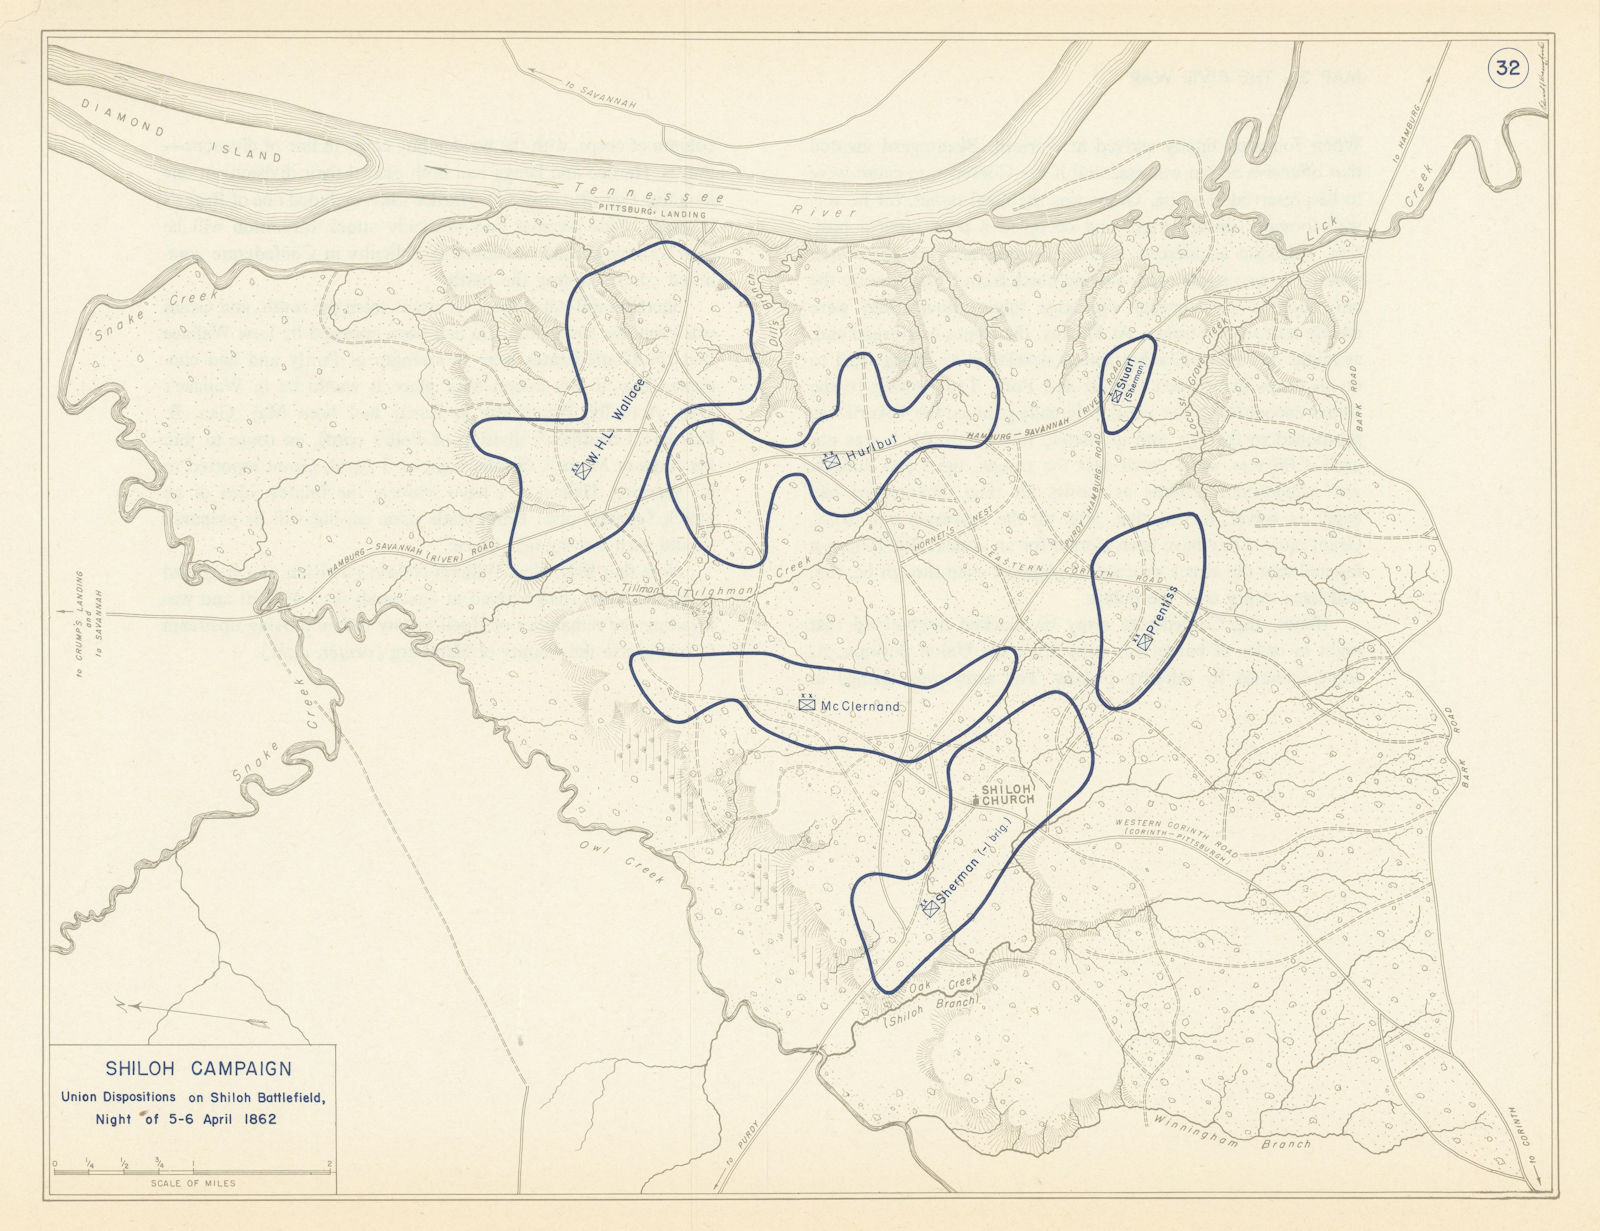 American Civil War 5-6 April 1862 Shiloh Battlefield Union Dispositions 1959 map